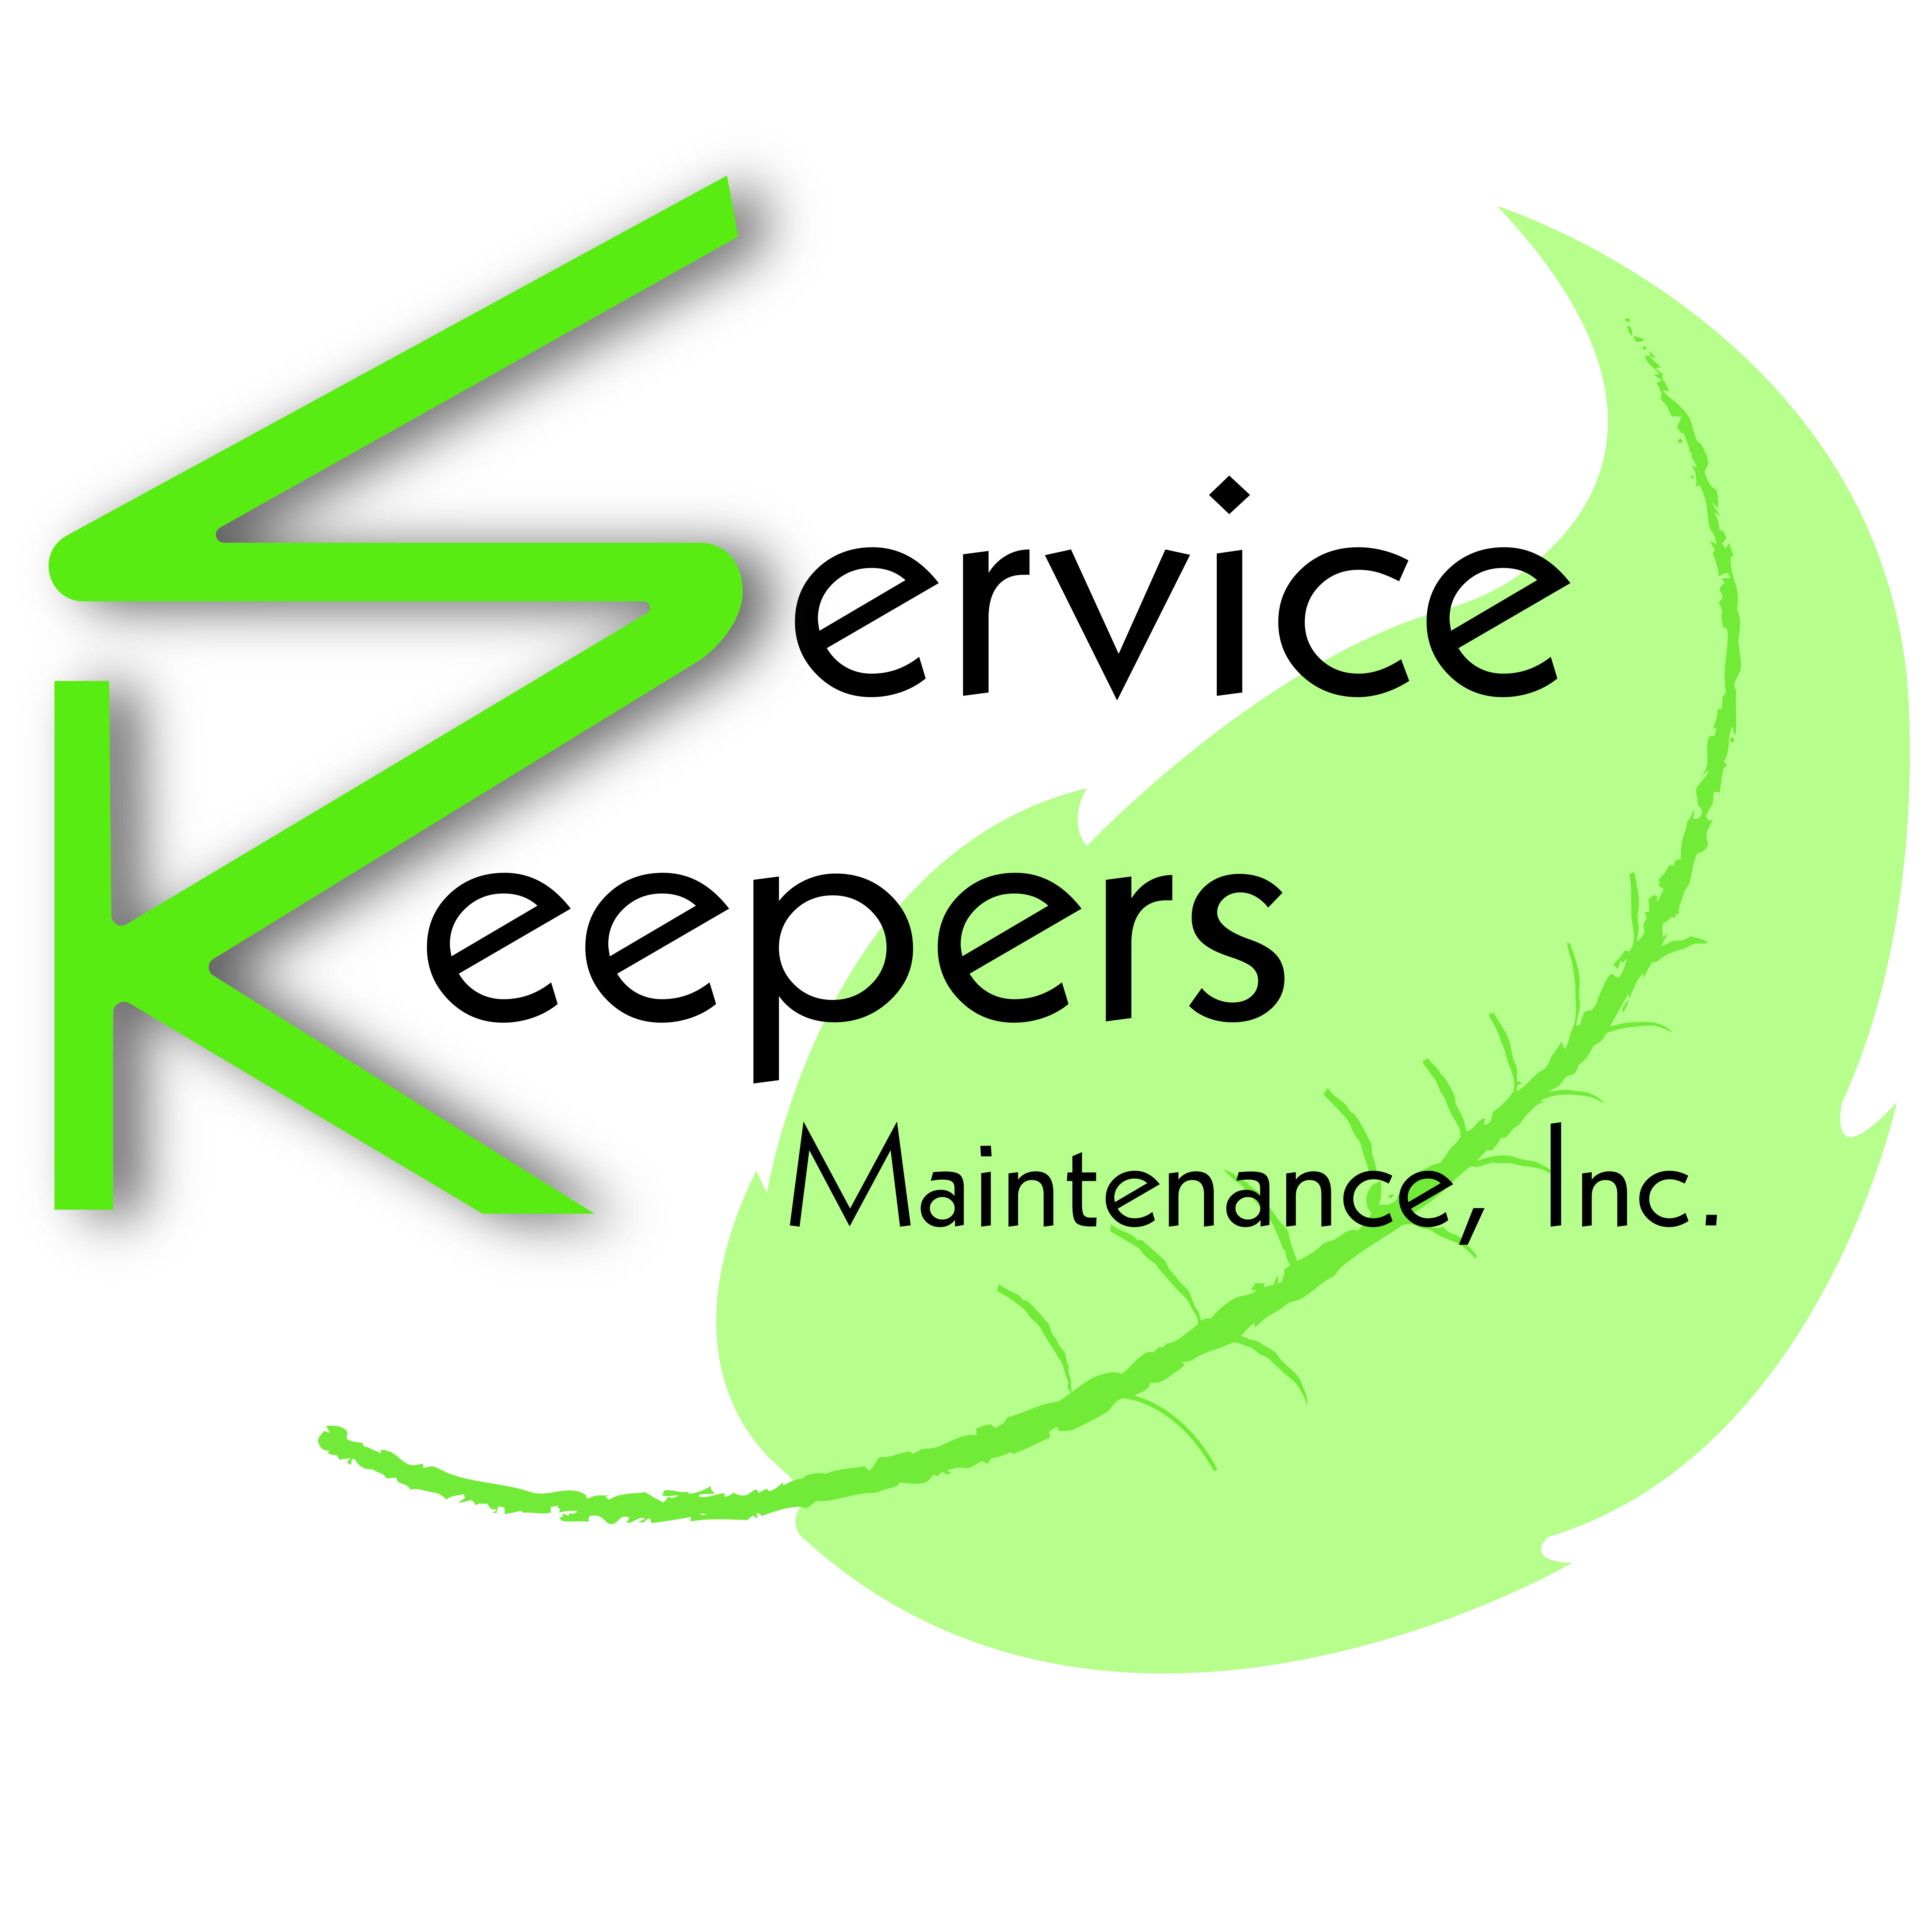 Service Keepers Maintanence, Inc. Logo